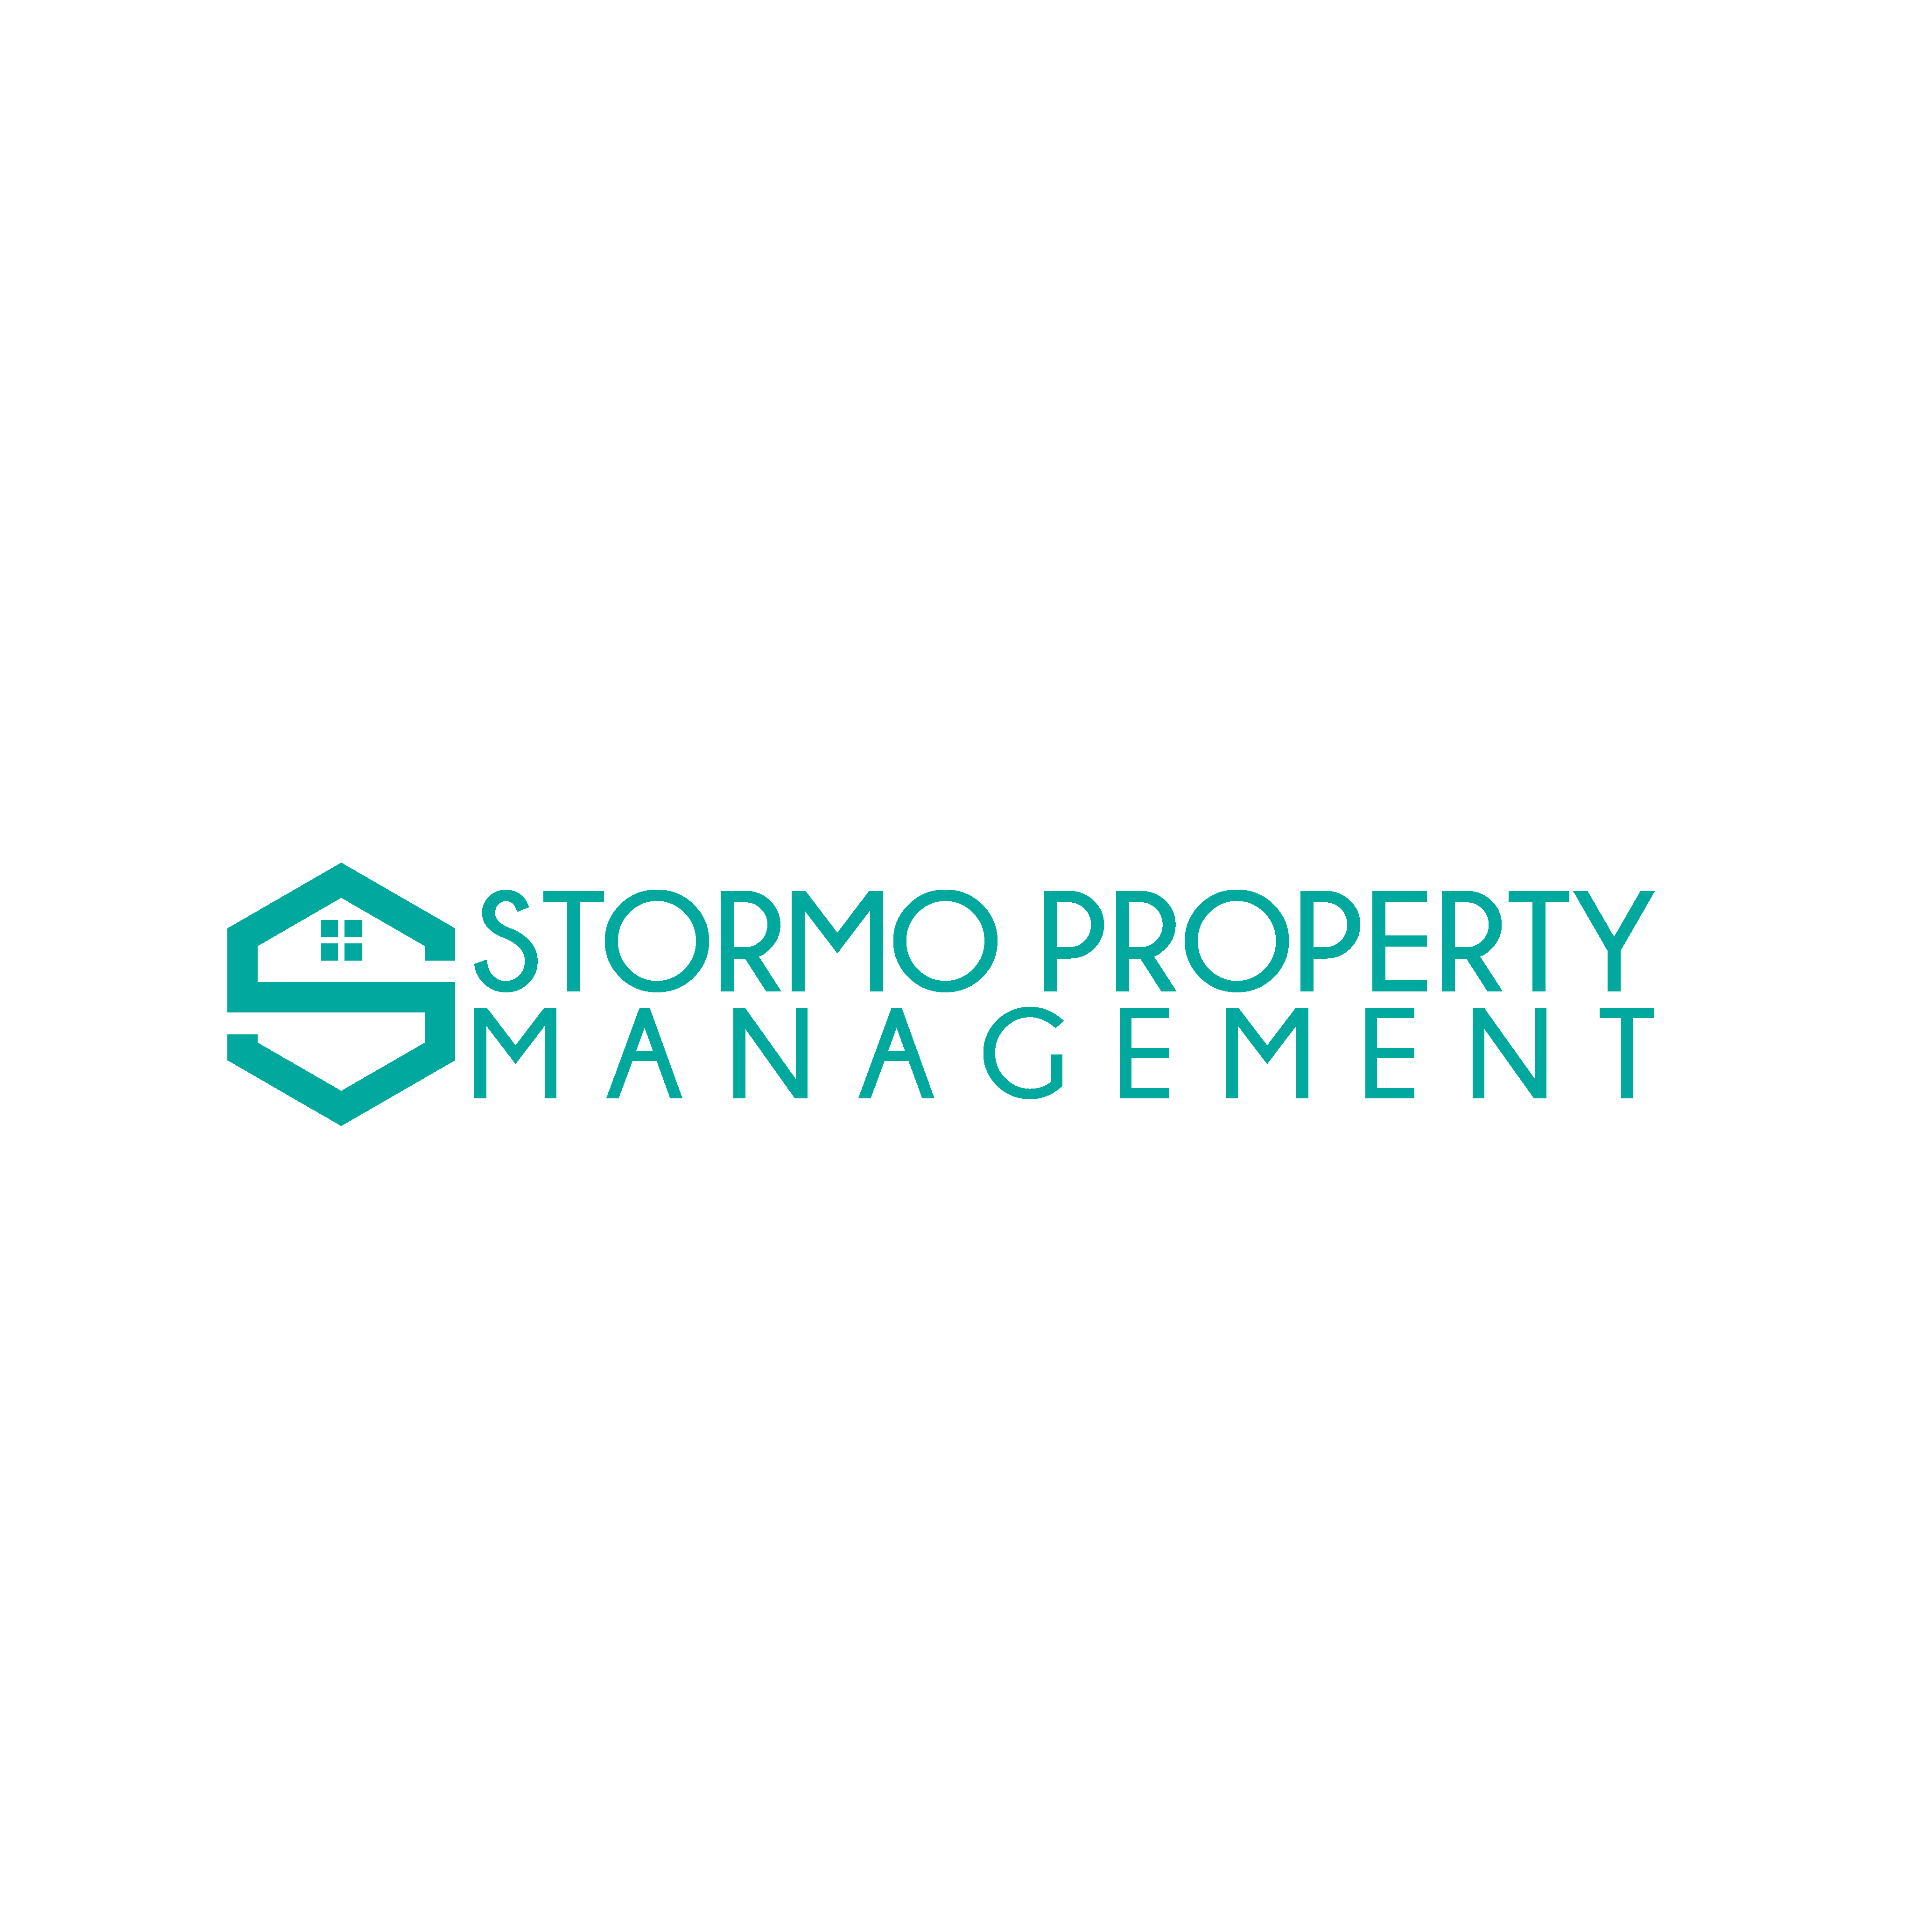 Stormo Property Management logo